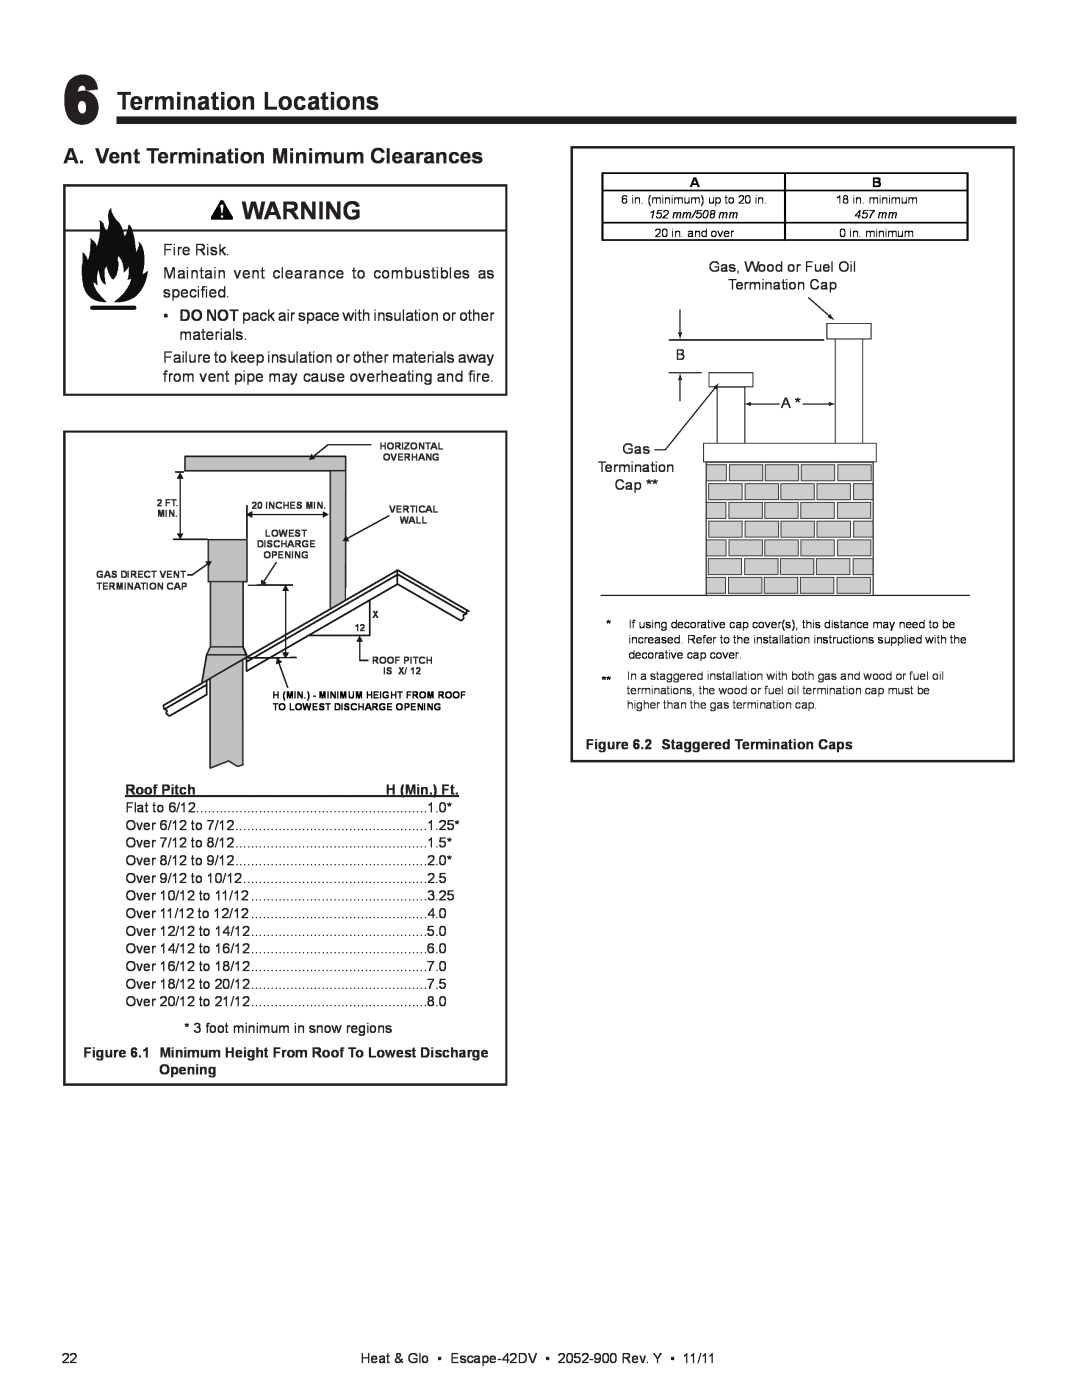 Heat & Glo LifeStyle Escape-42DVLP owner manual Termination Locations, A. Vent Termination Minimum Clearances 